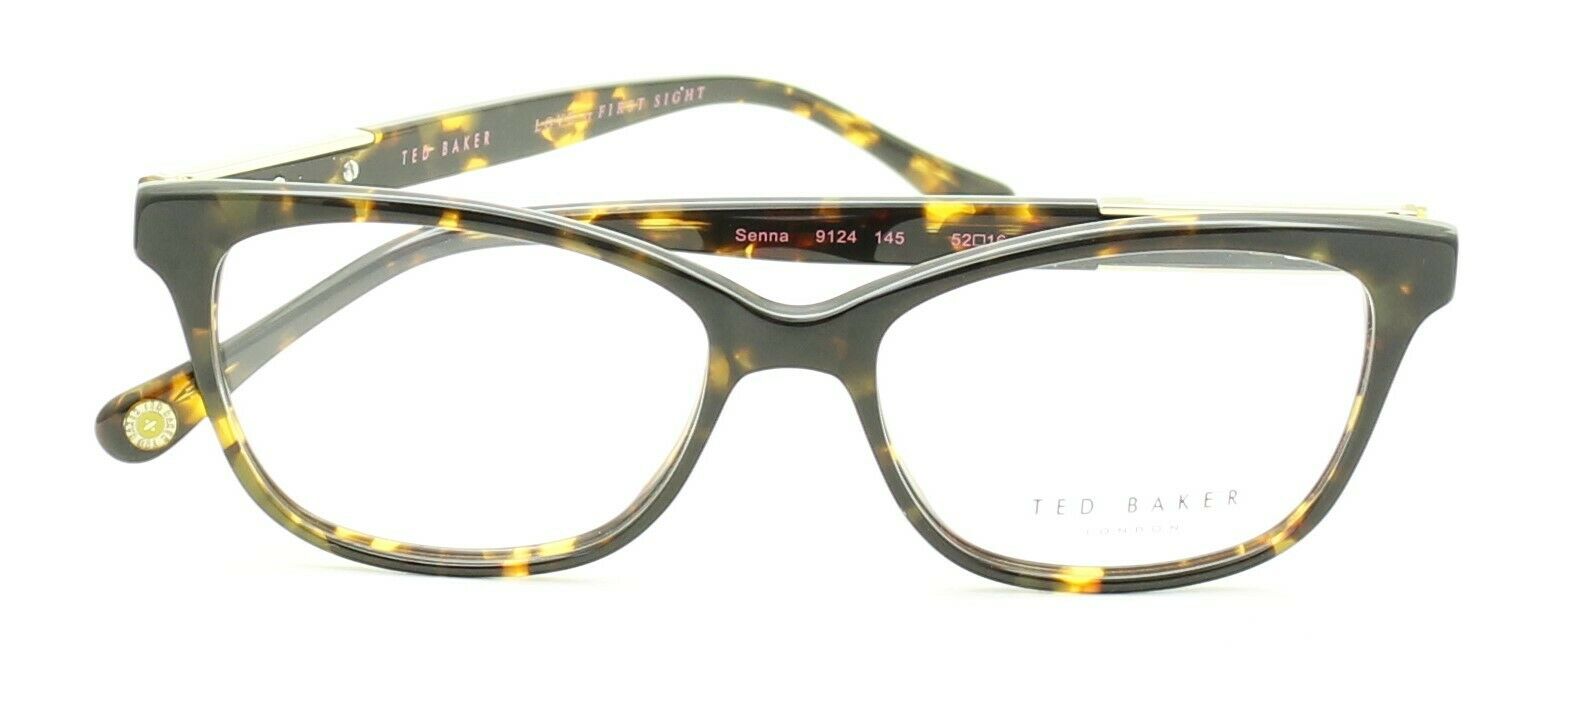 TED BAKER Senna 9124 145 52mm Eyewear FRAMES Glasses Eyeglasses RX Optical - New